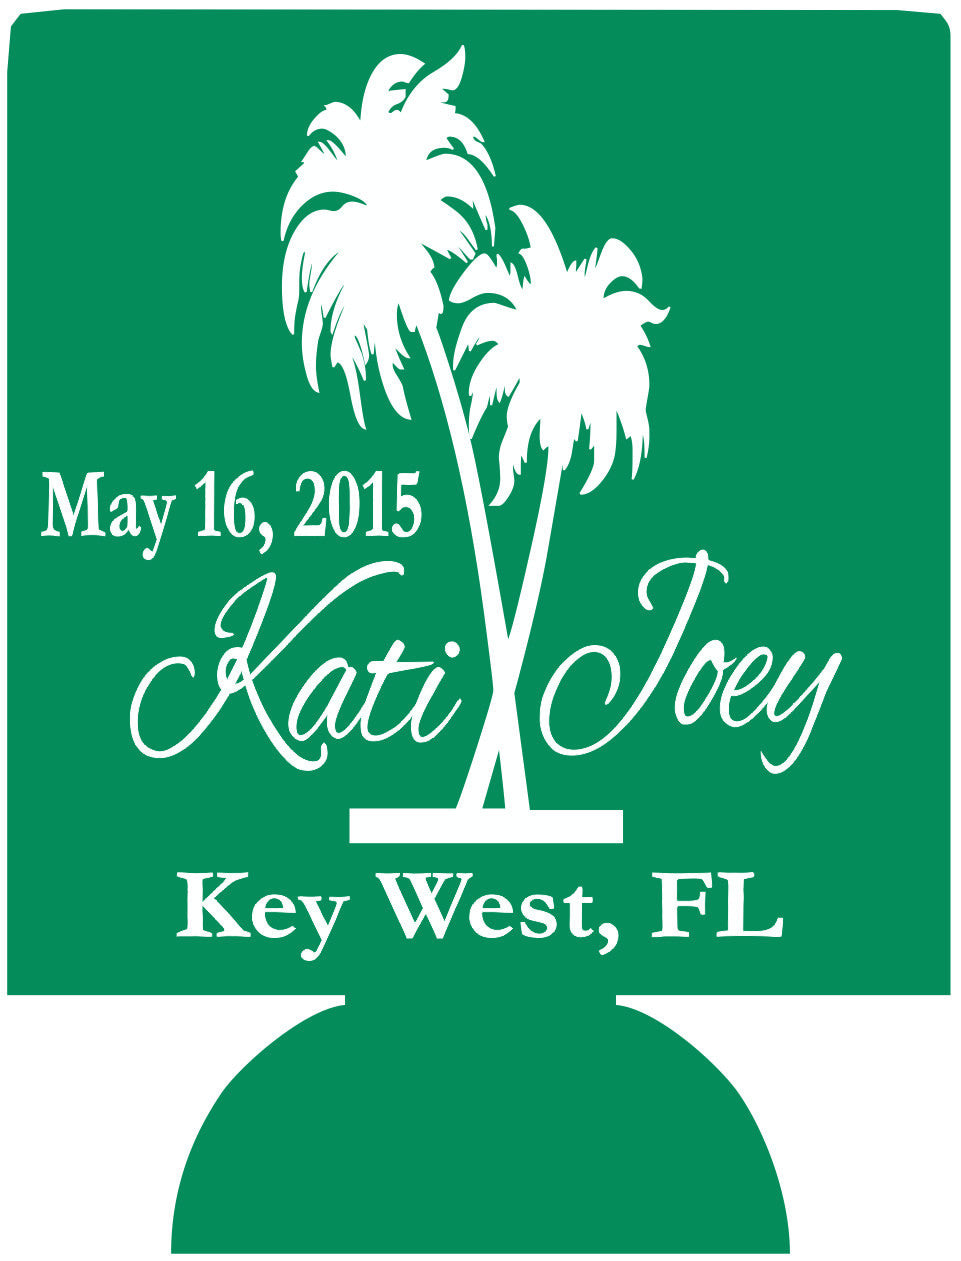 Key West Beach Wedding Koozies Favors Can Coolers Odysseycustom